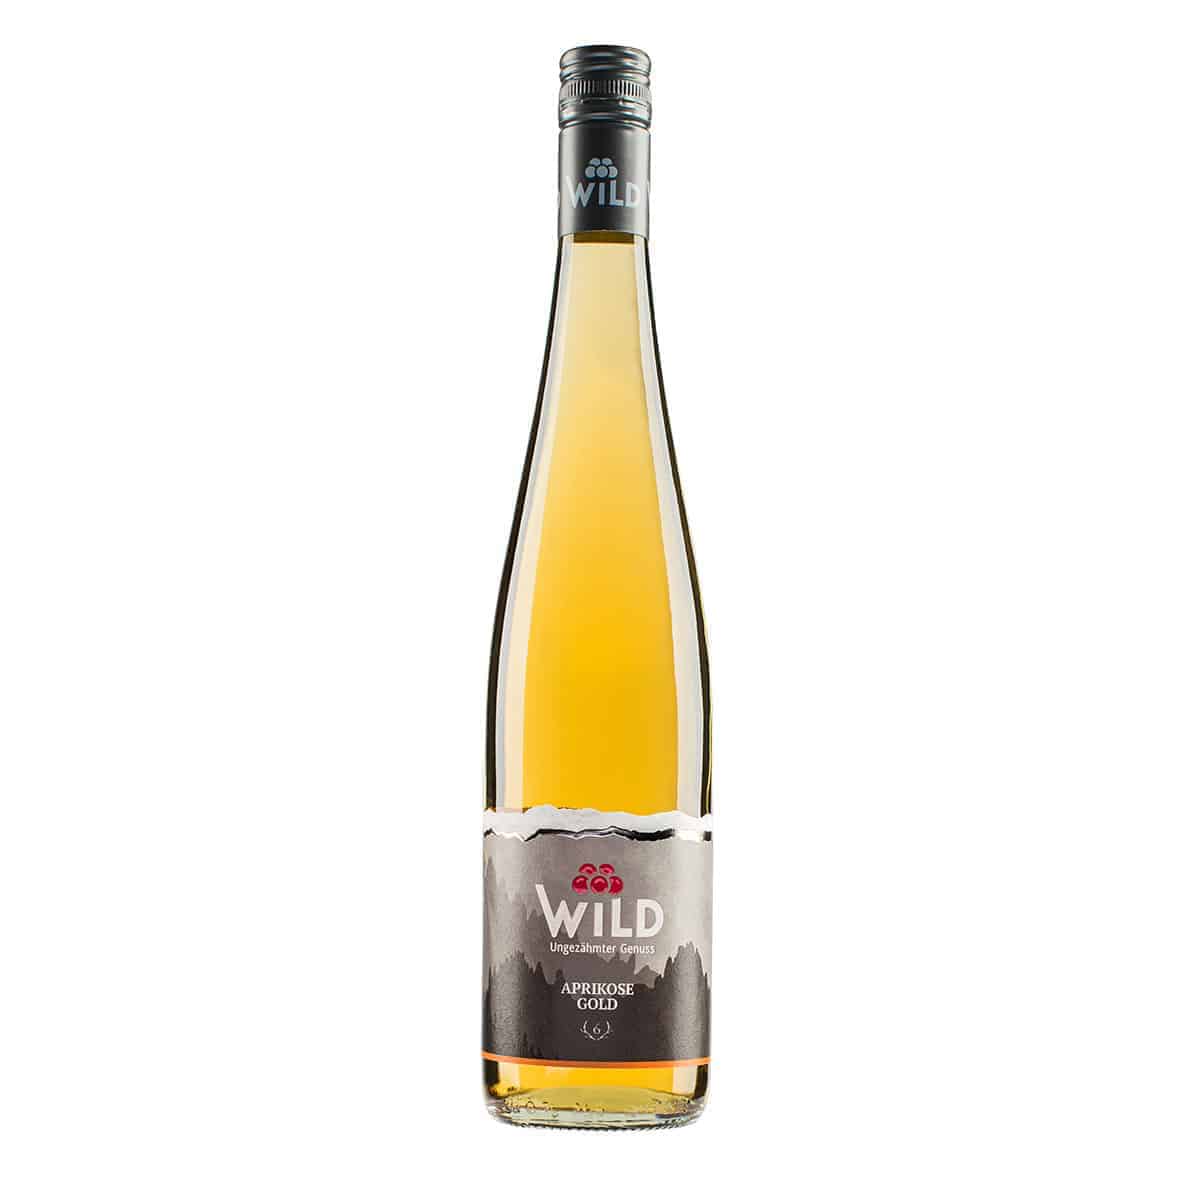 Wild Aprikose Gold 35%vol, 0,7l